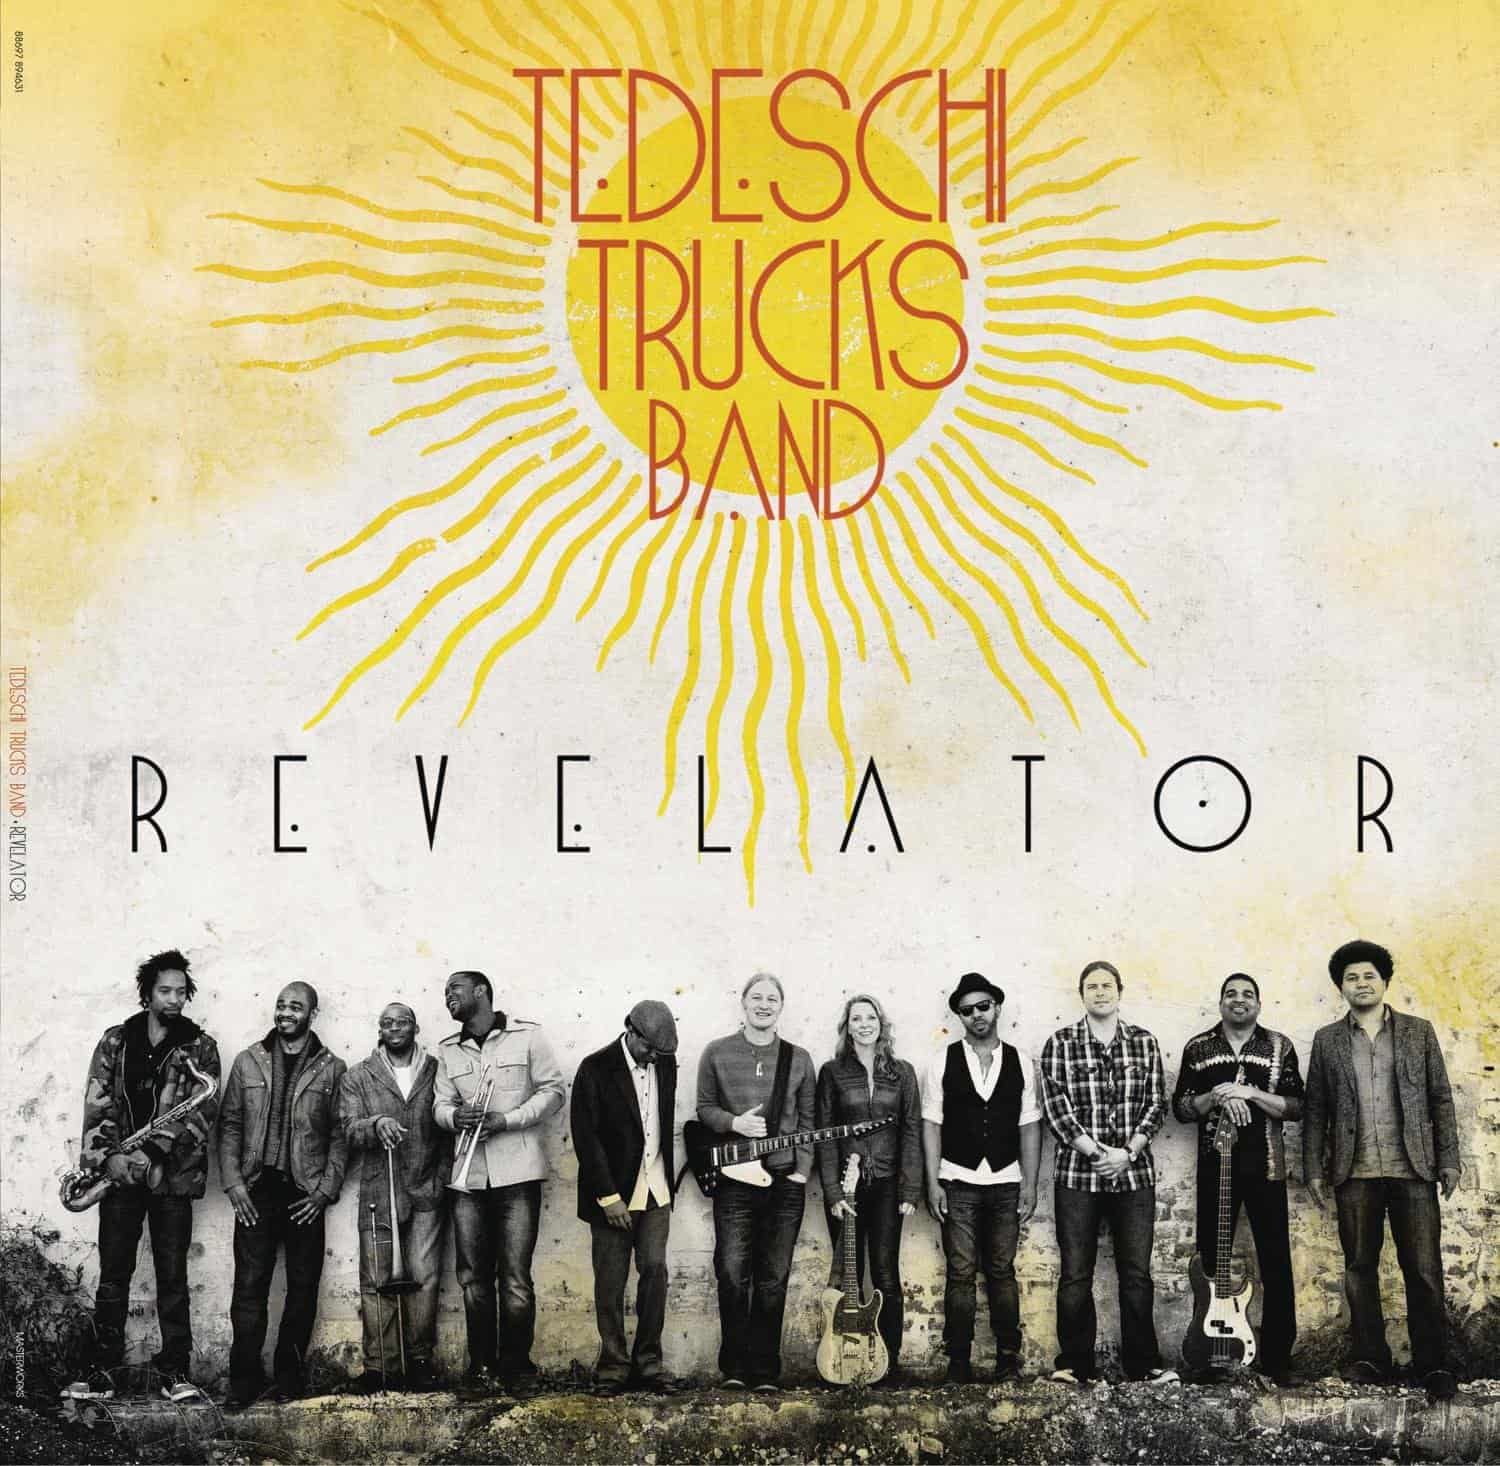 Tedeschi-Trucks-Band-Revelator-LP-vinyl-record-album-front